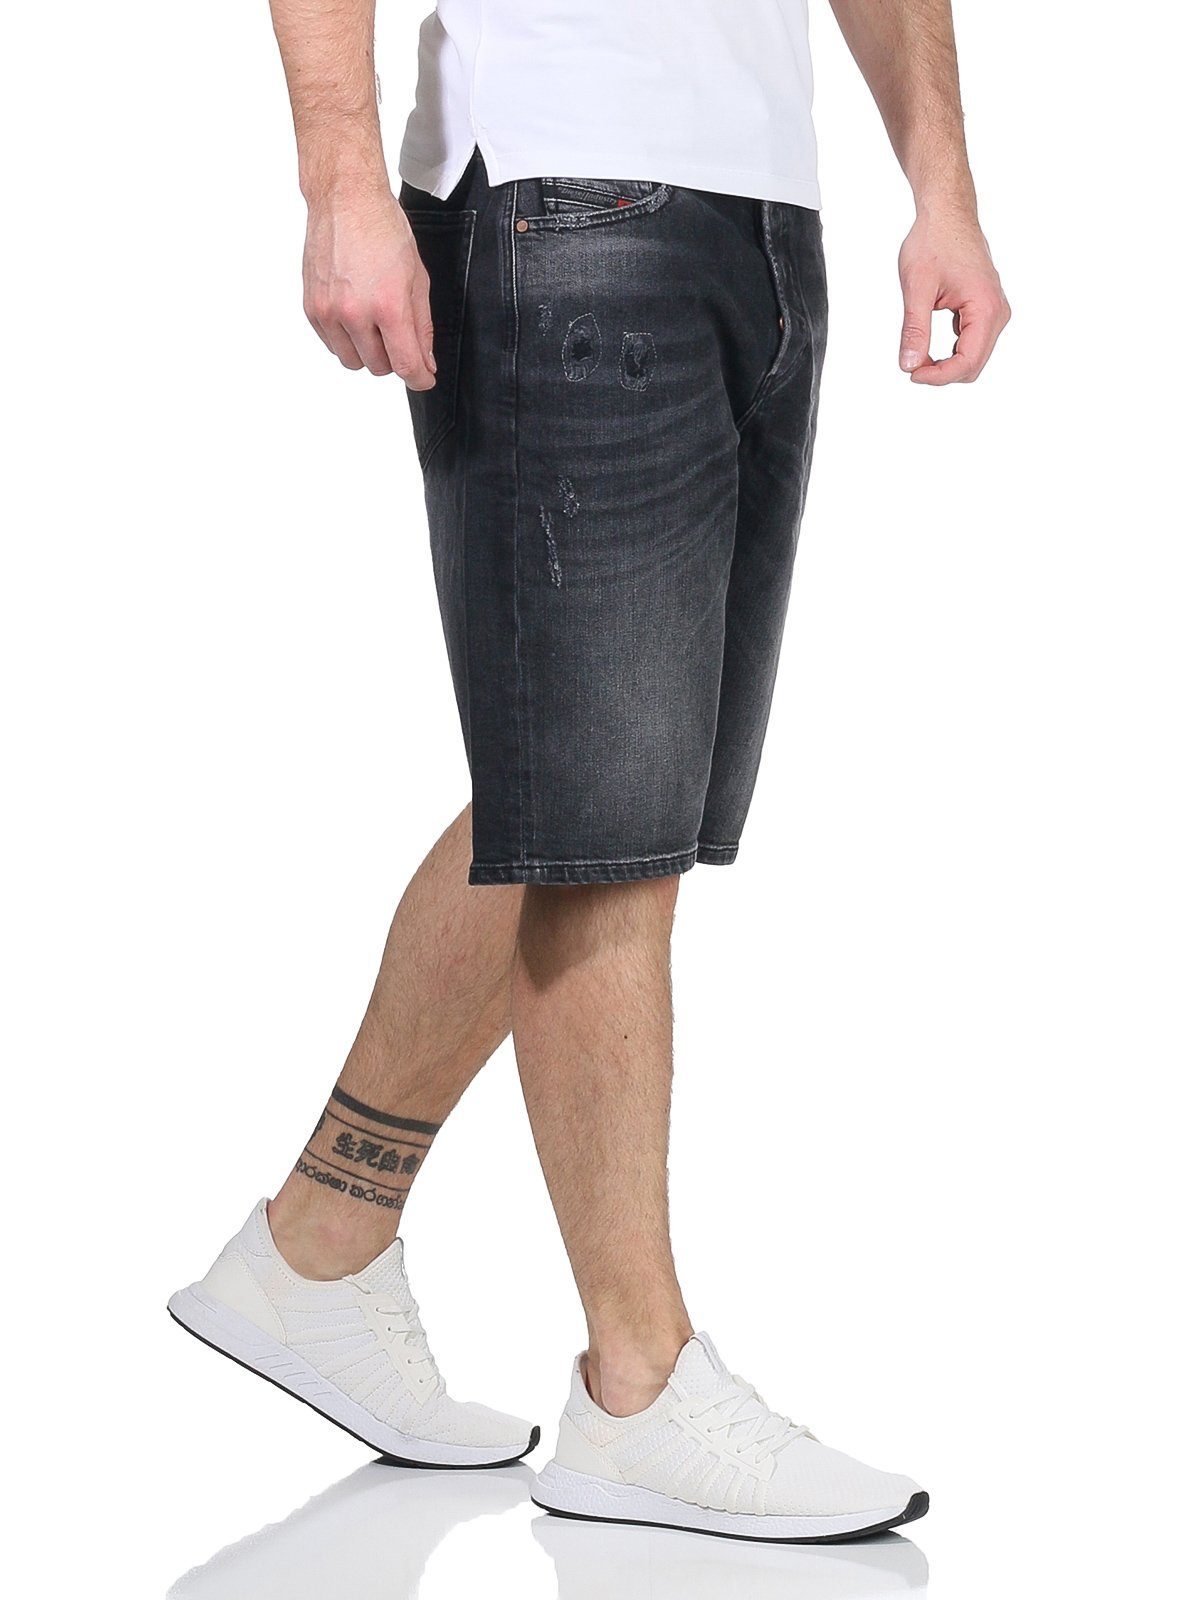 Jeans dezenter RG48R R930L kurze Jeansshorts Shorts, Shorts Used-Look Herren Kroshort Anthrazit Hose Diesel